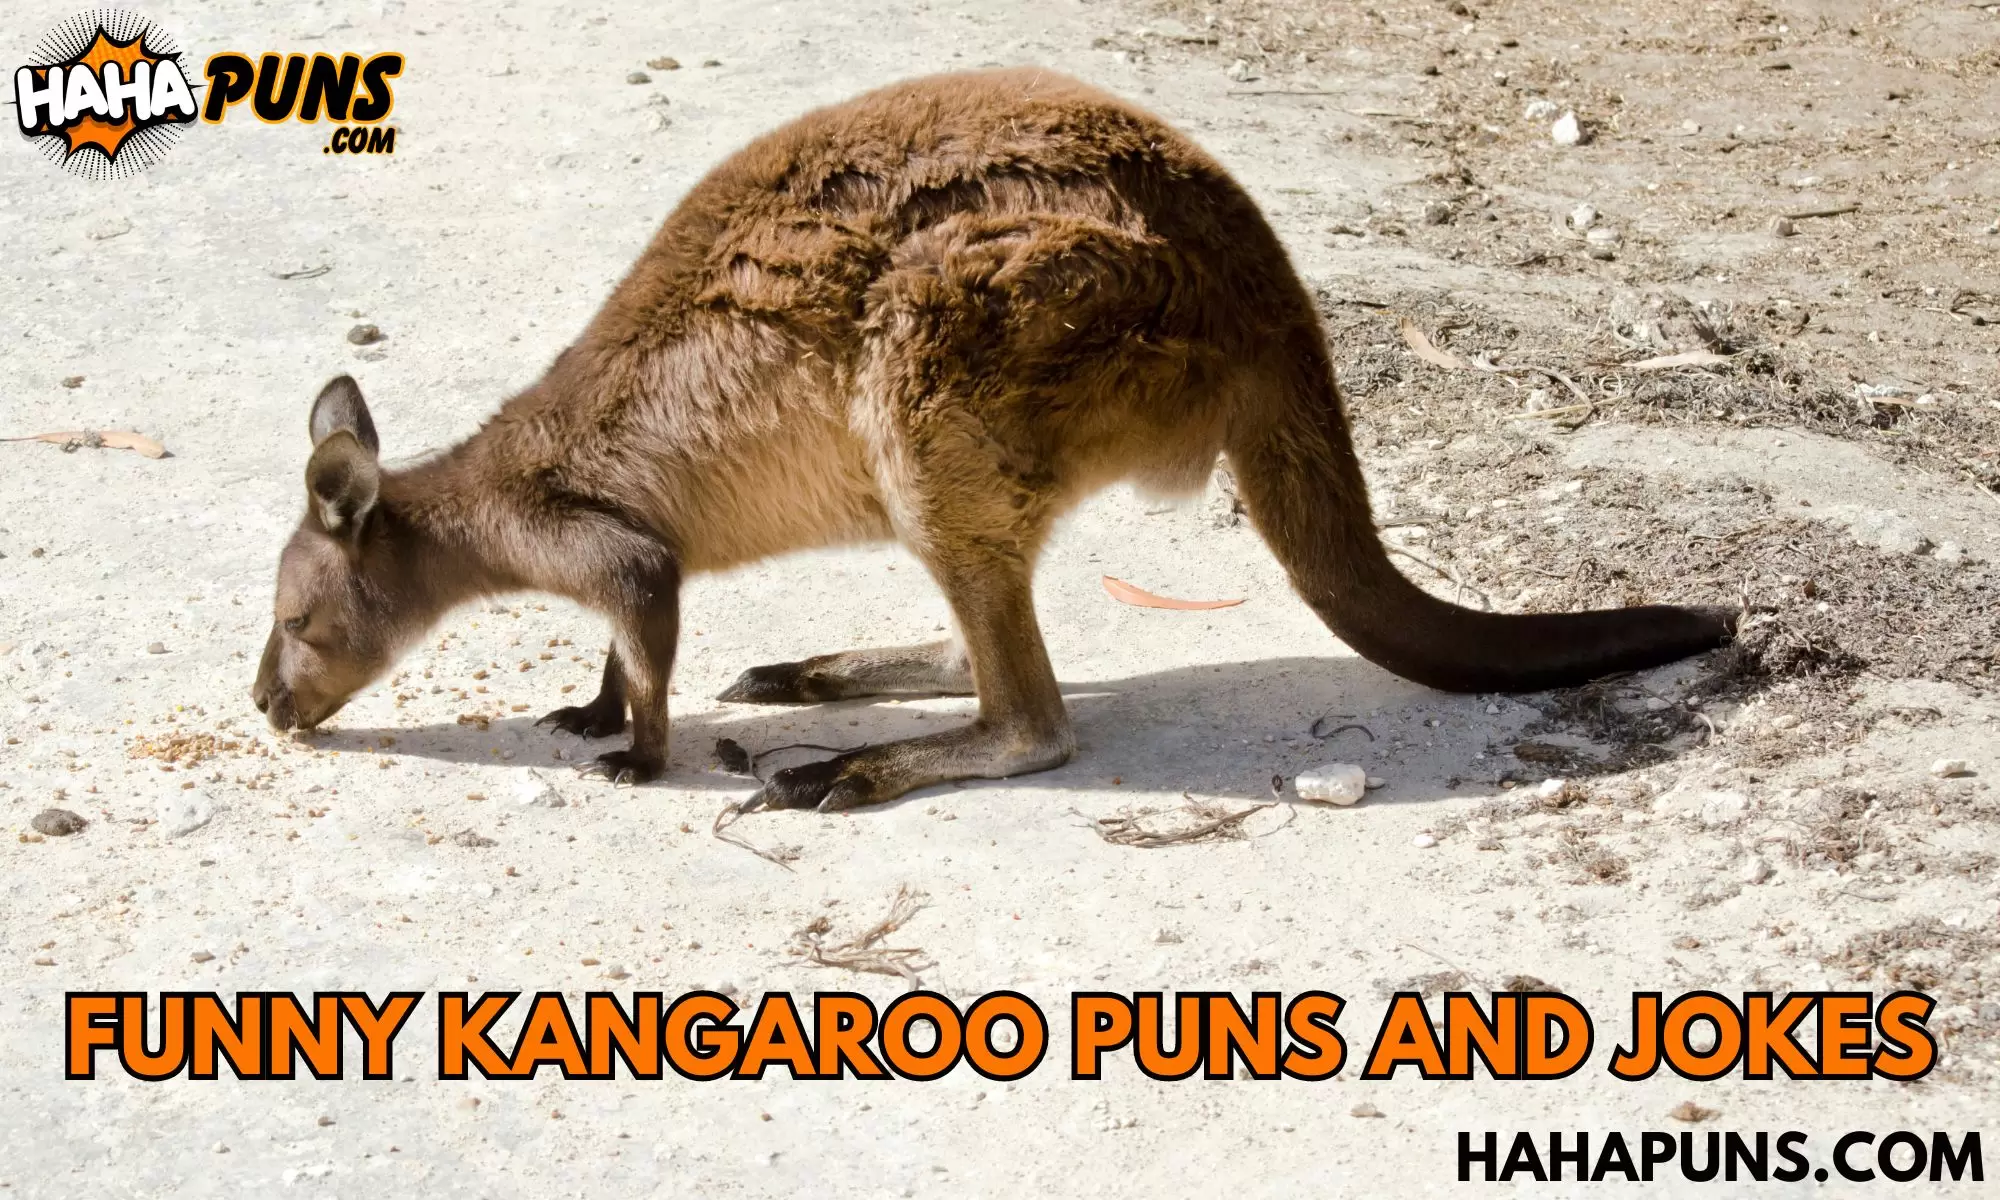 Funny Kangaroo Puns and Jokes